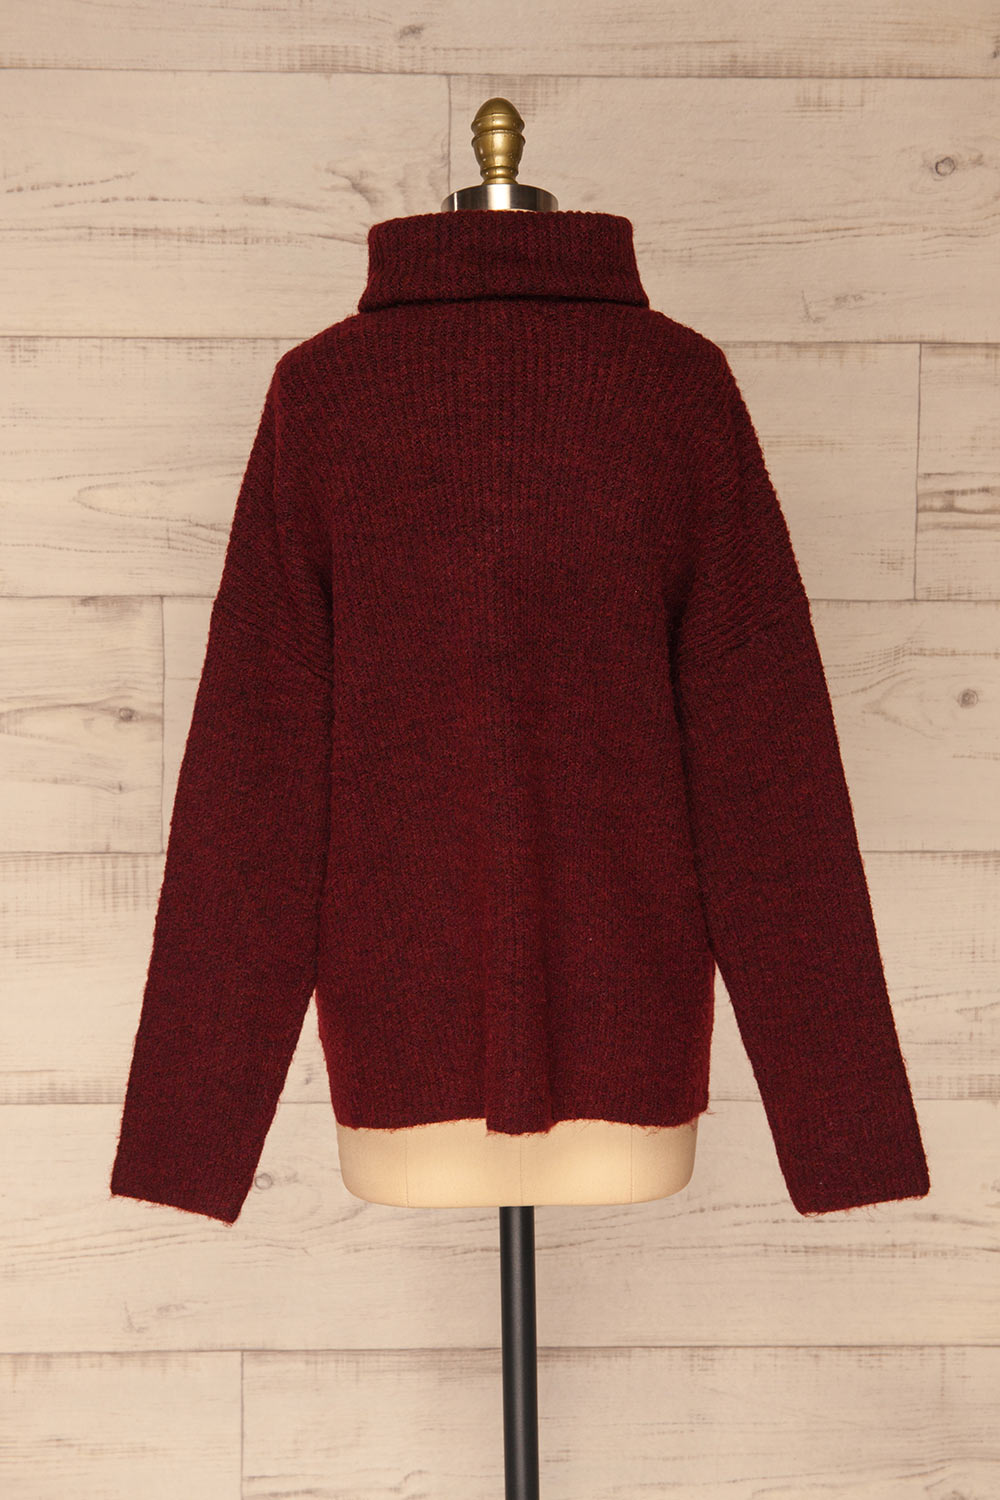 Givri Burgundy Knit Turtleneck Sweater | La petite garçonne back view 